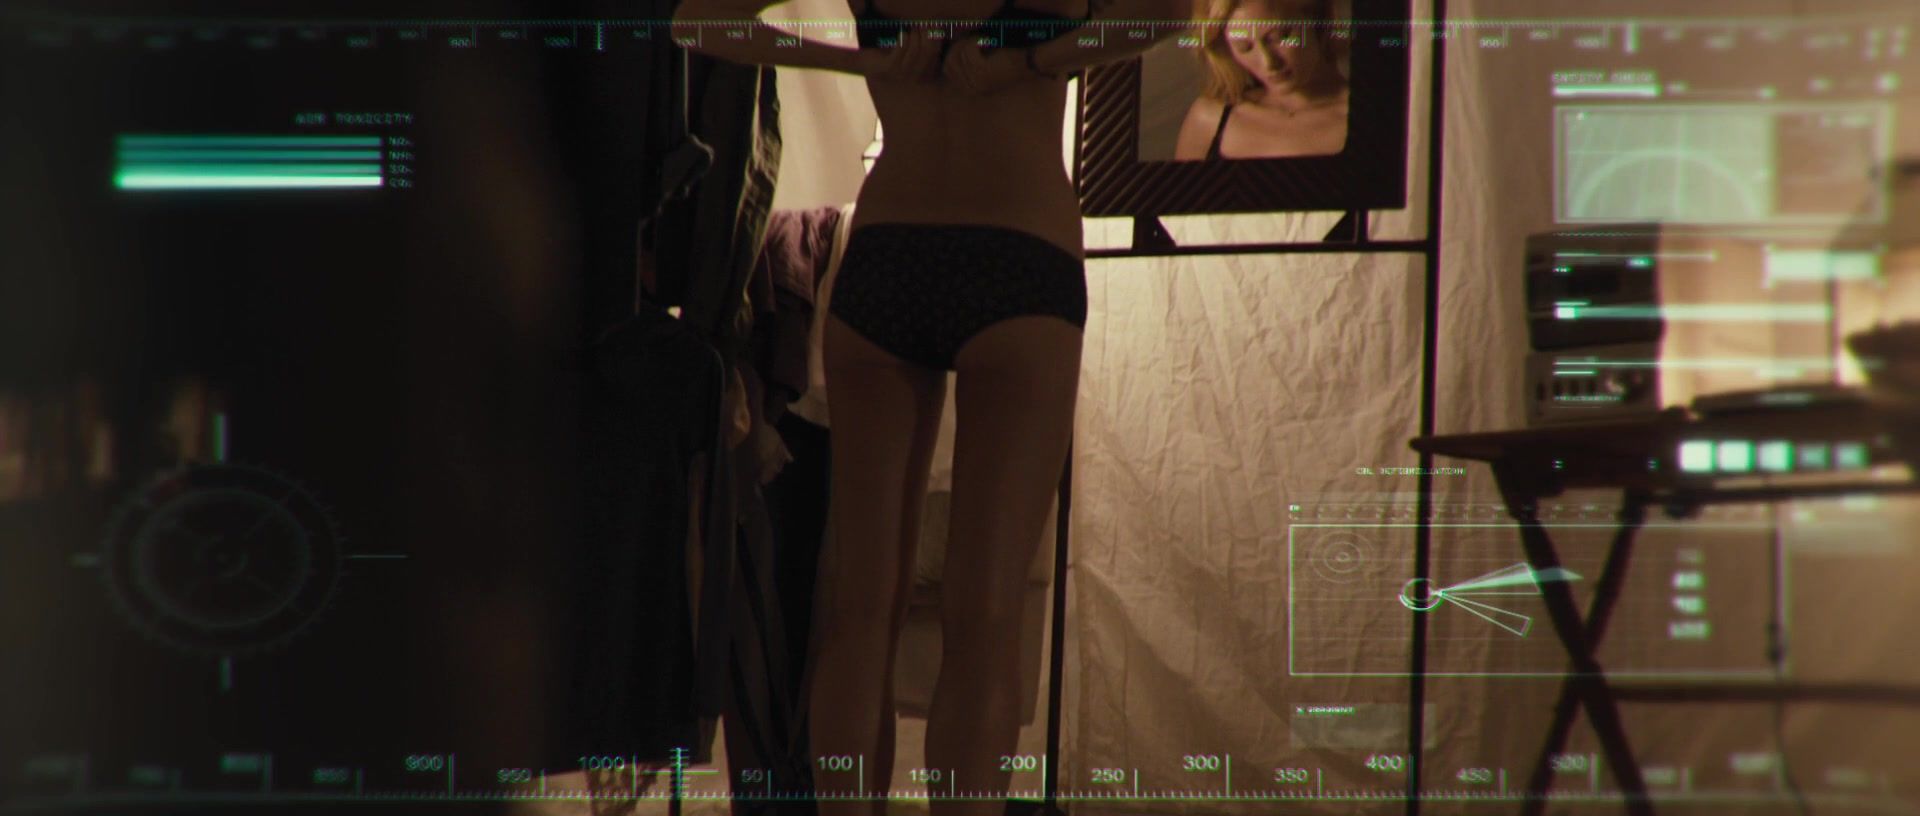 Babepedia Hot actress Ashley Hinshaw from movie The Pyramid (2014) Cam Girl